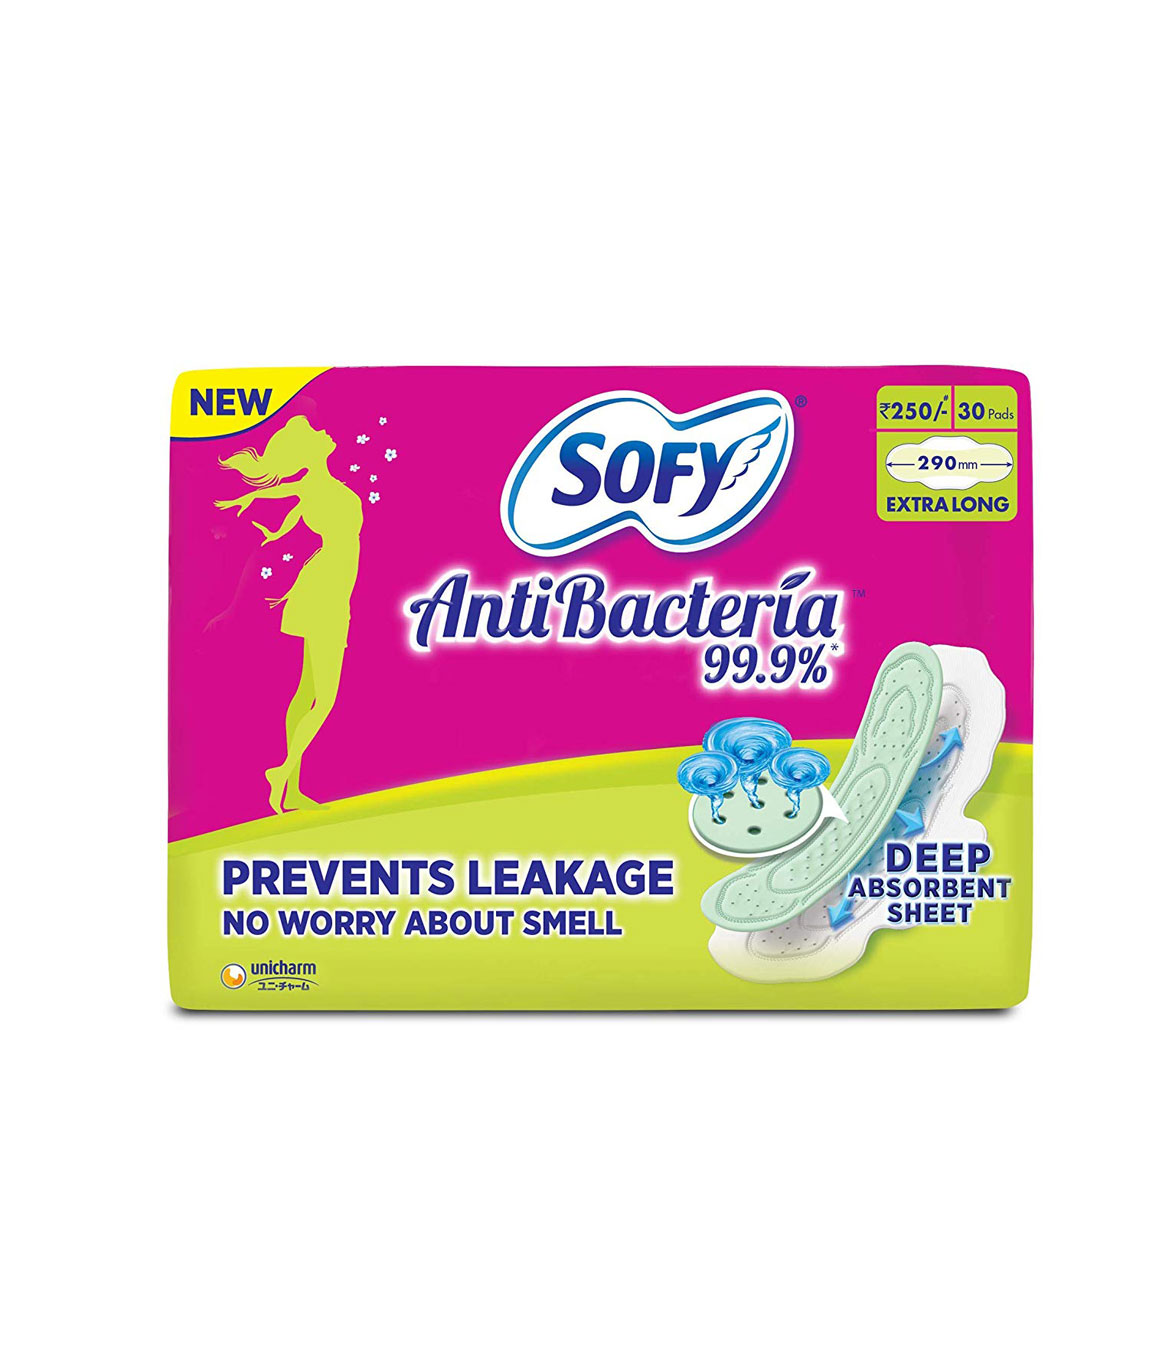 Sofy Antibacteria Extra Long Pads - 30 Count